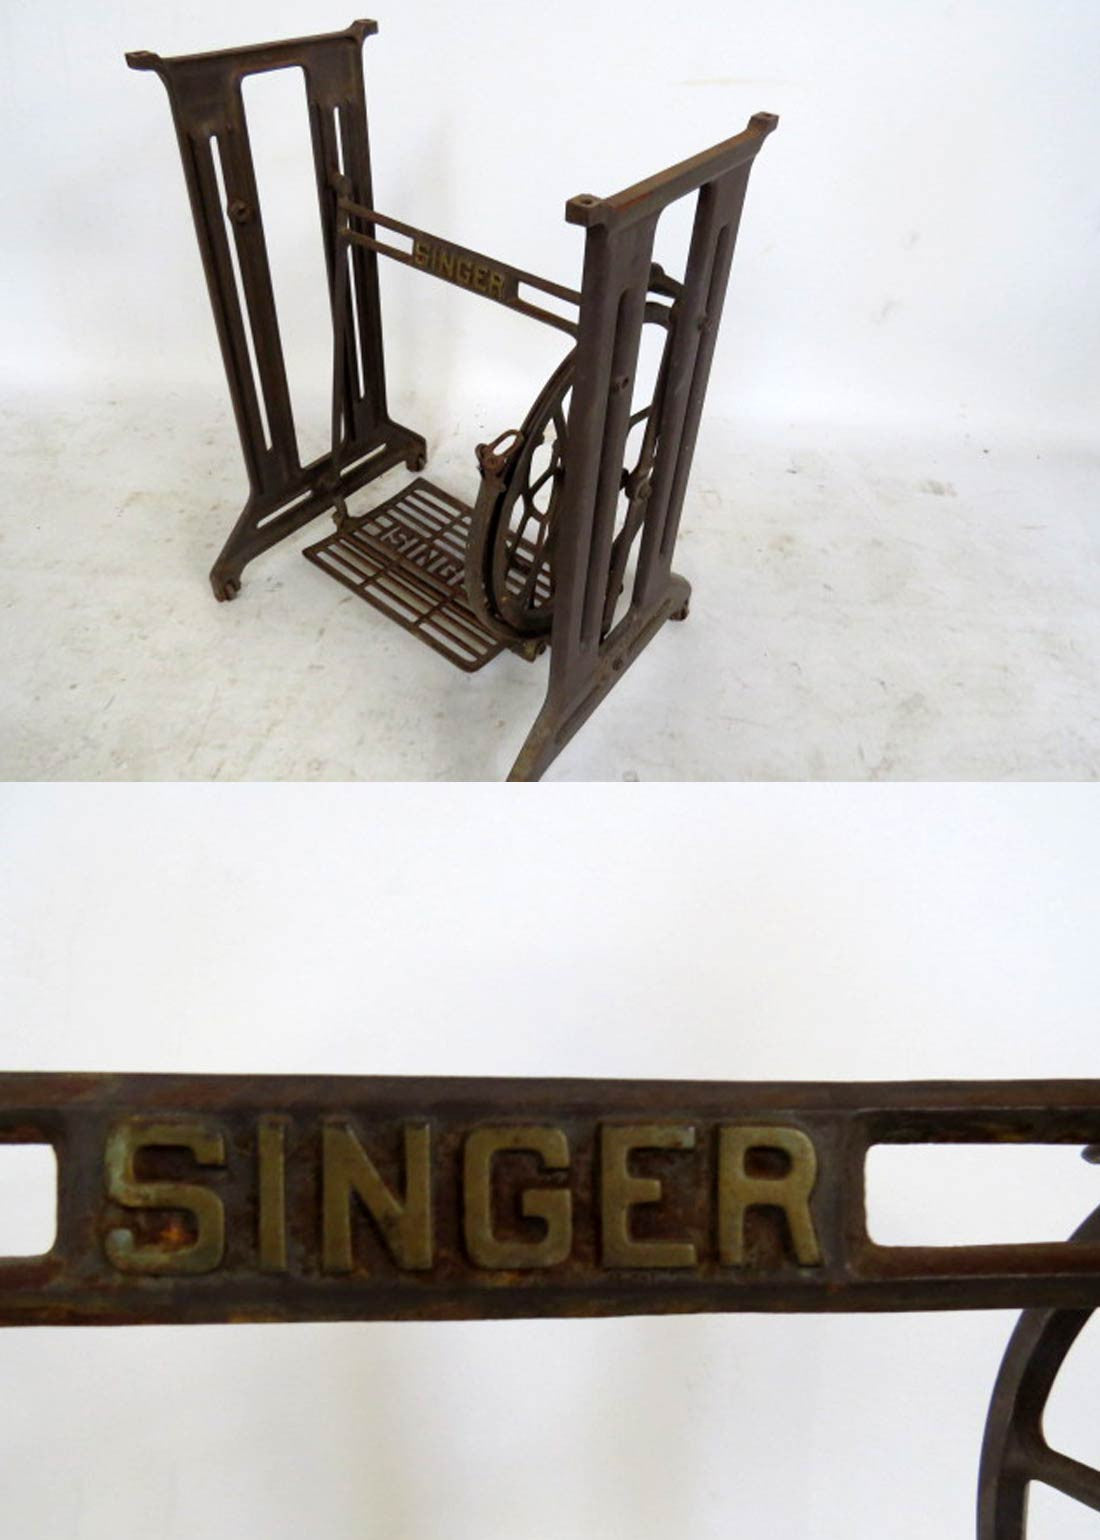 Singer Sawing Machine Table